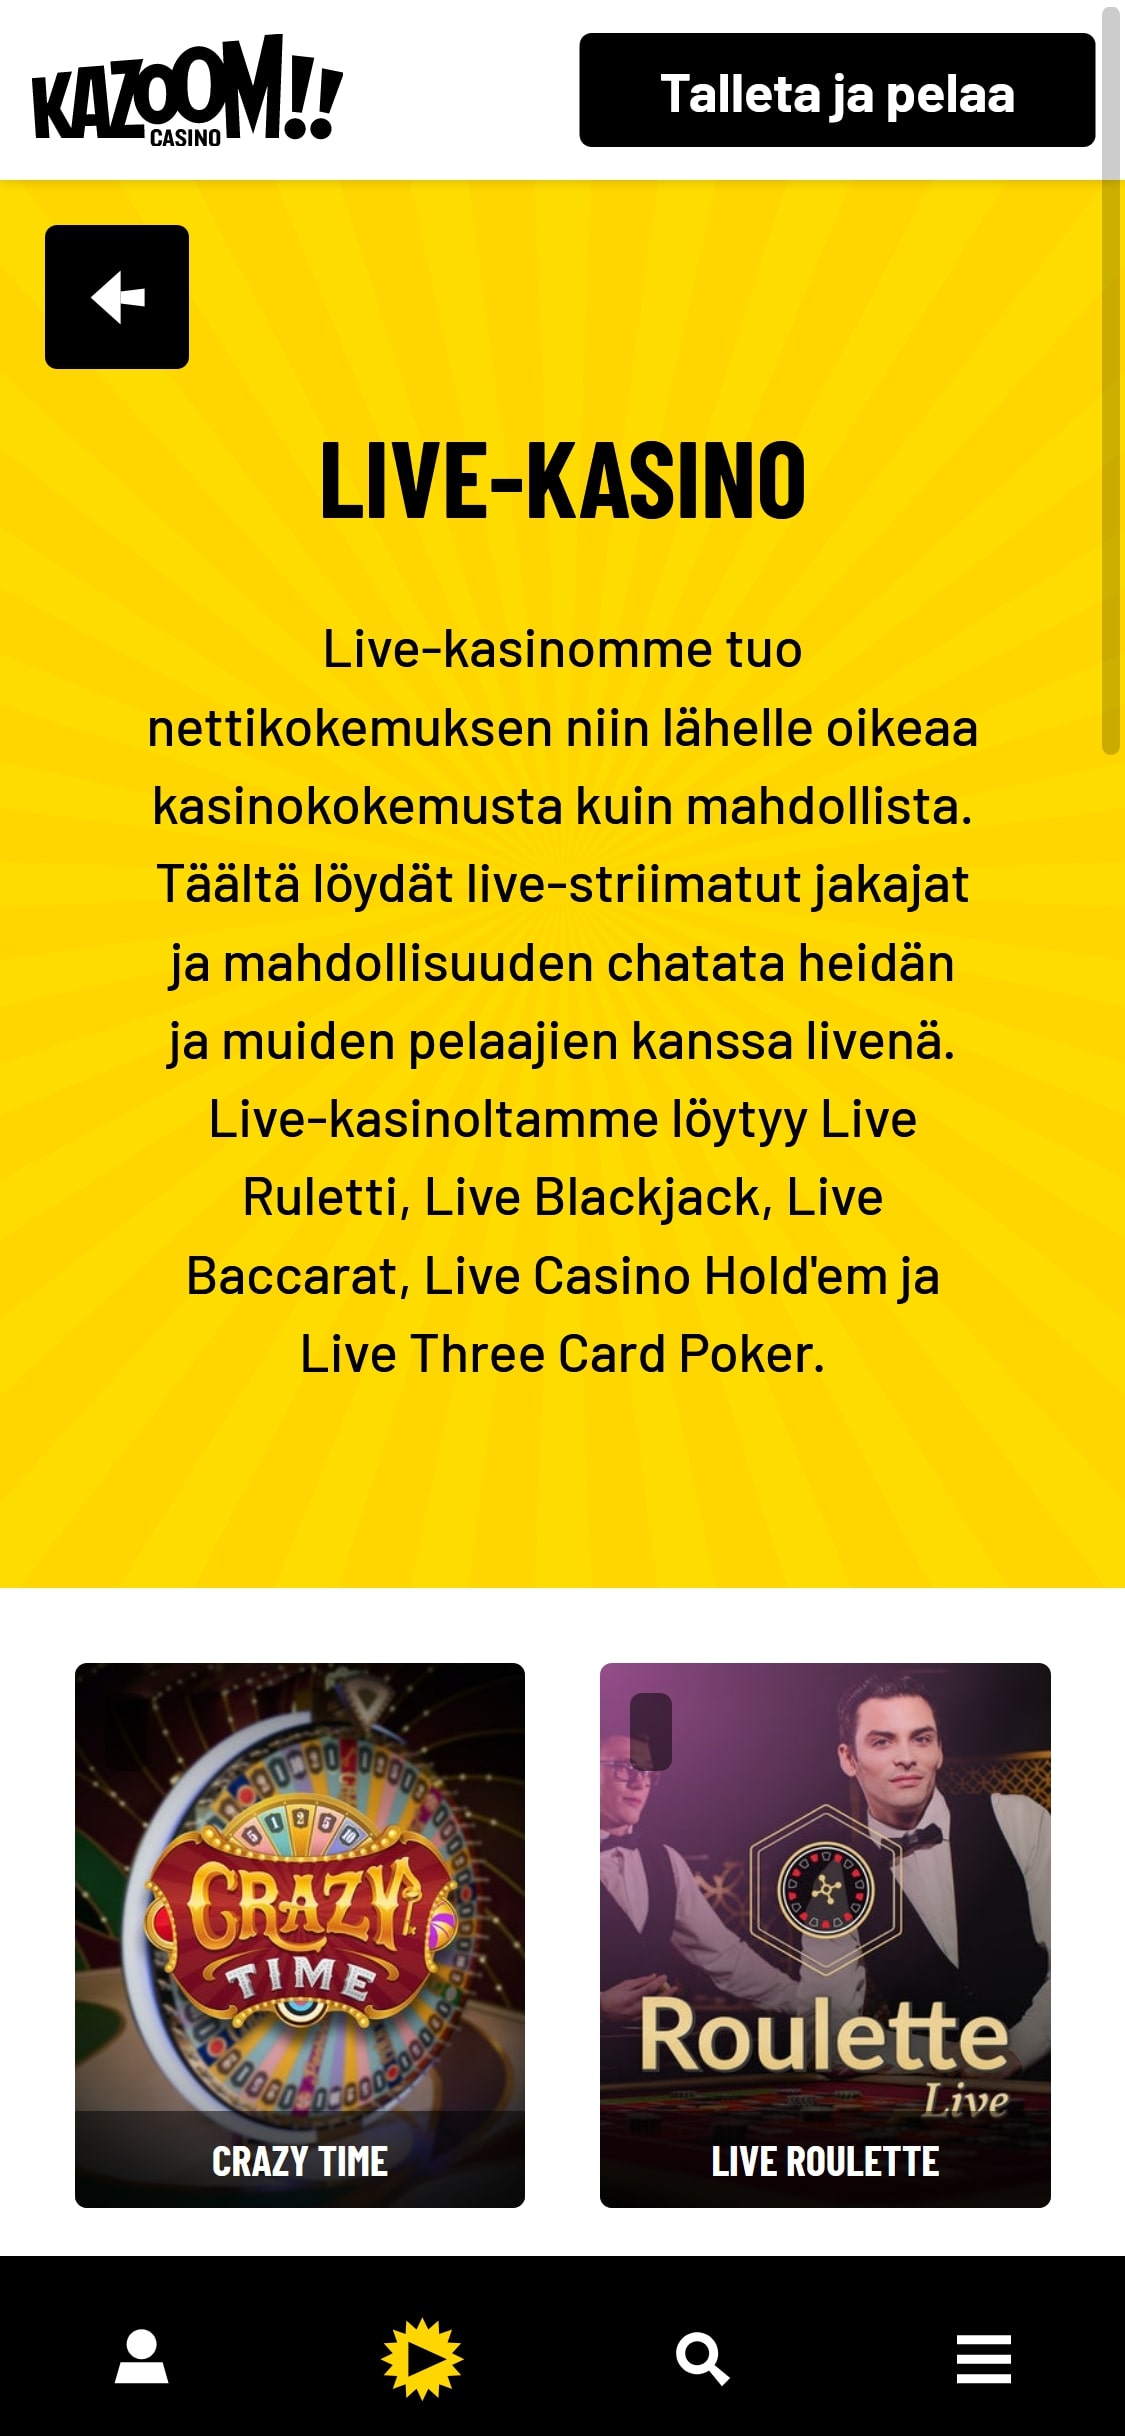 Kazoom Casino Mobile Live Dealer Games Review